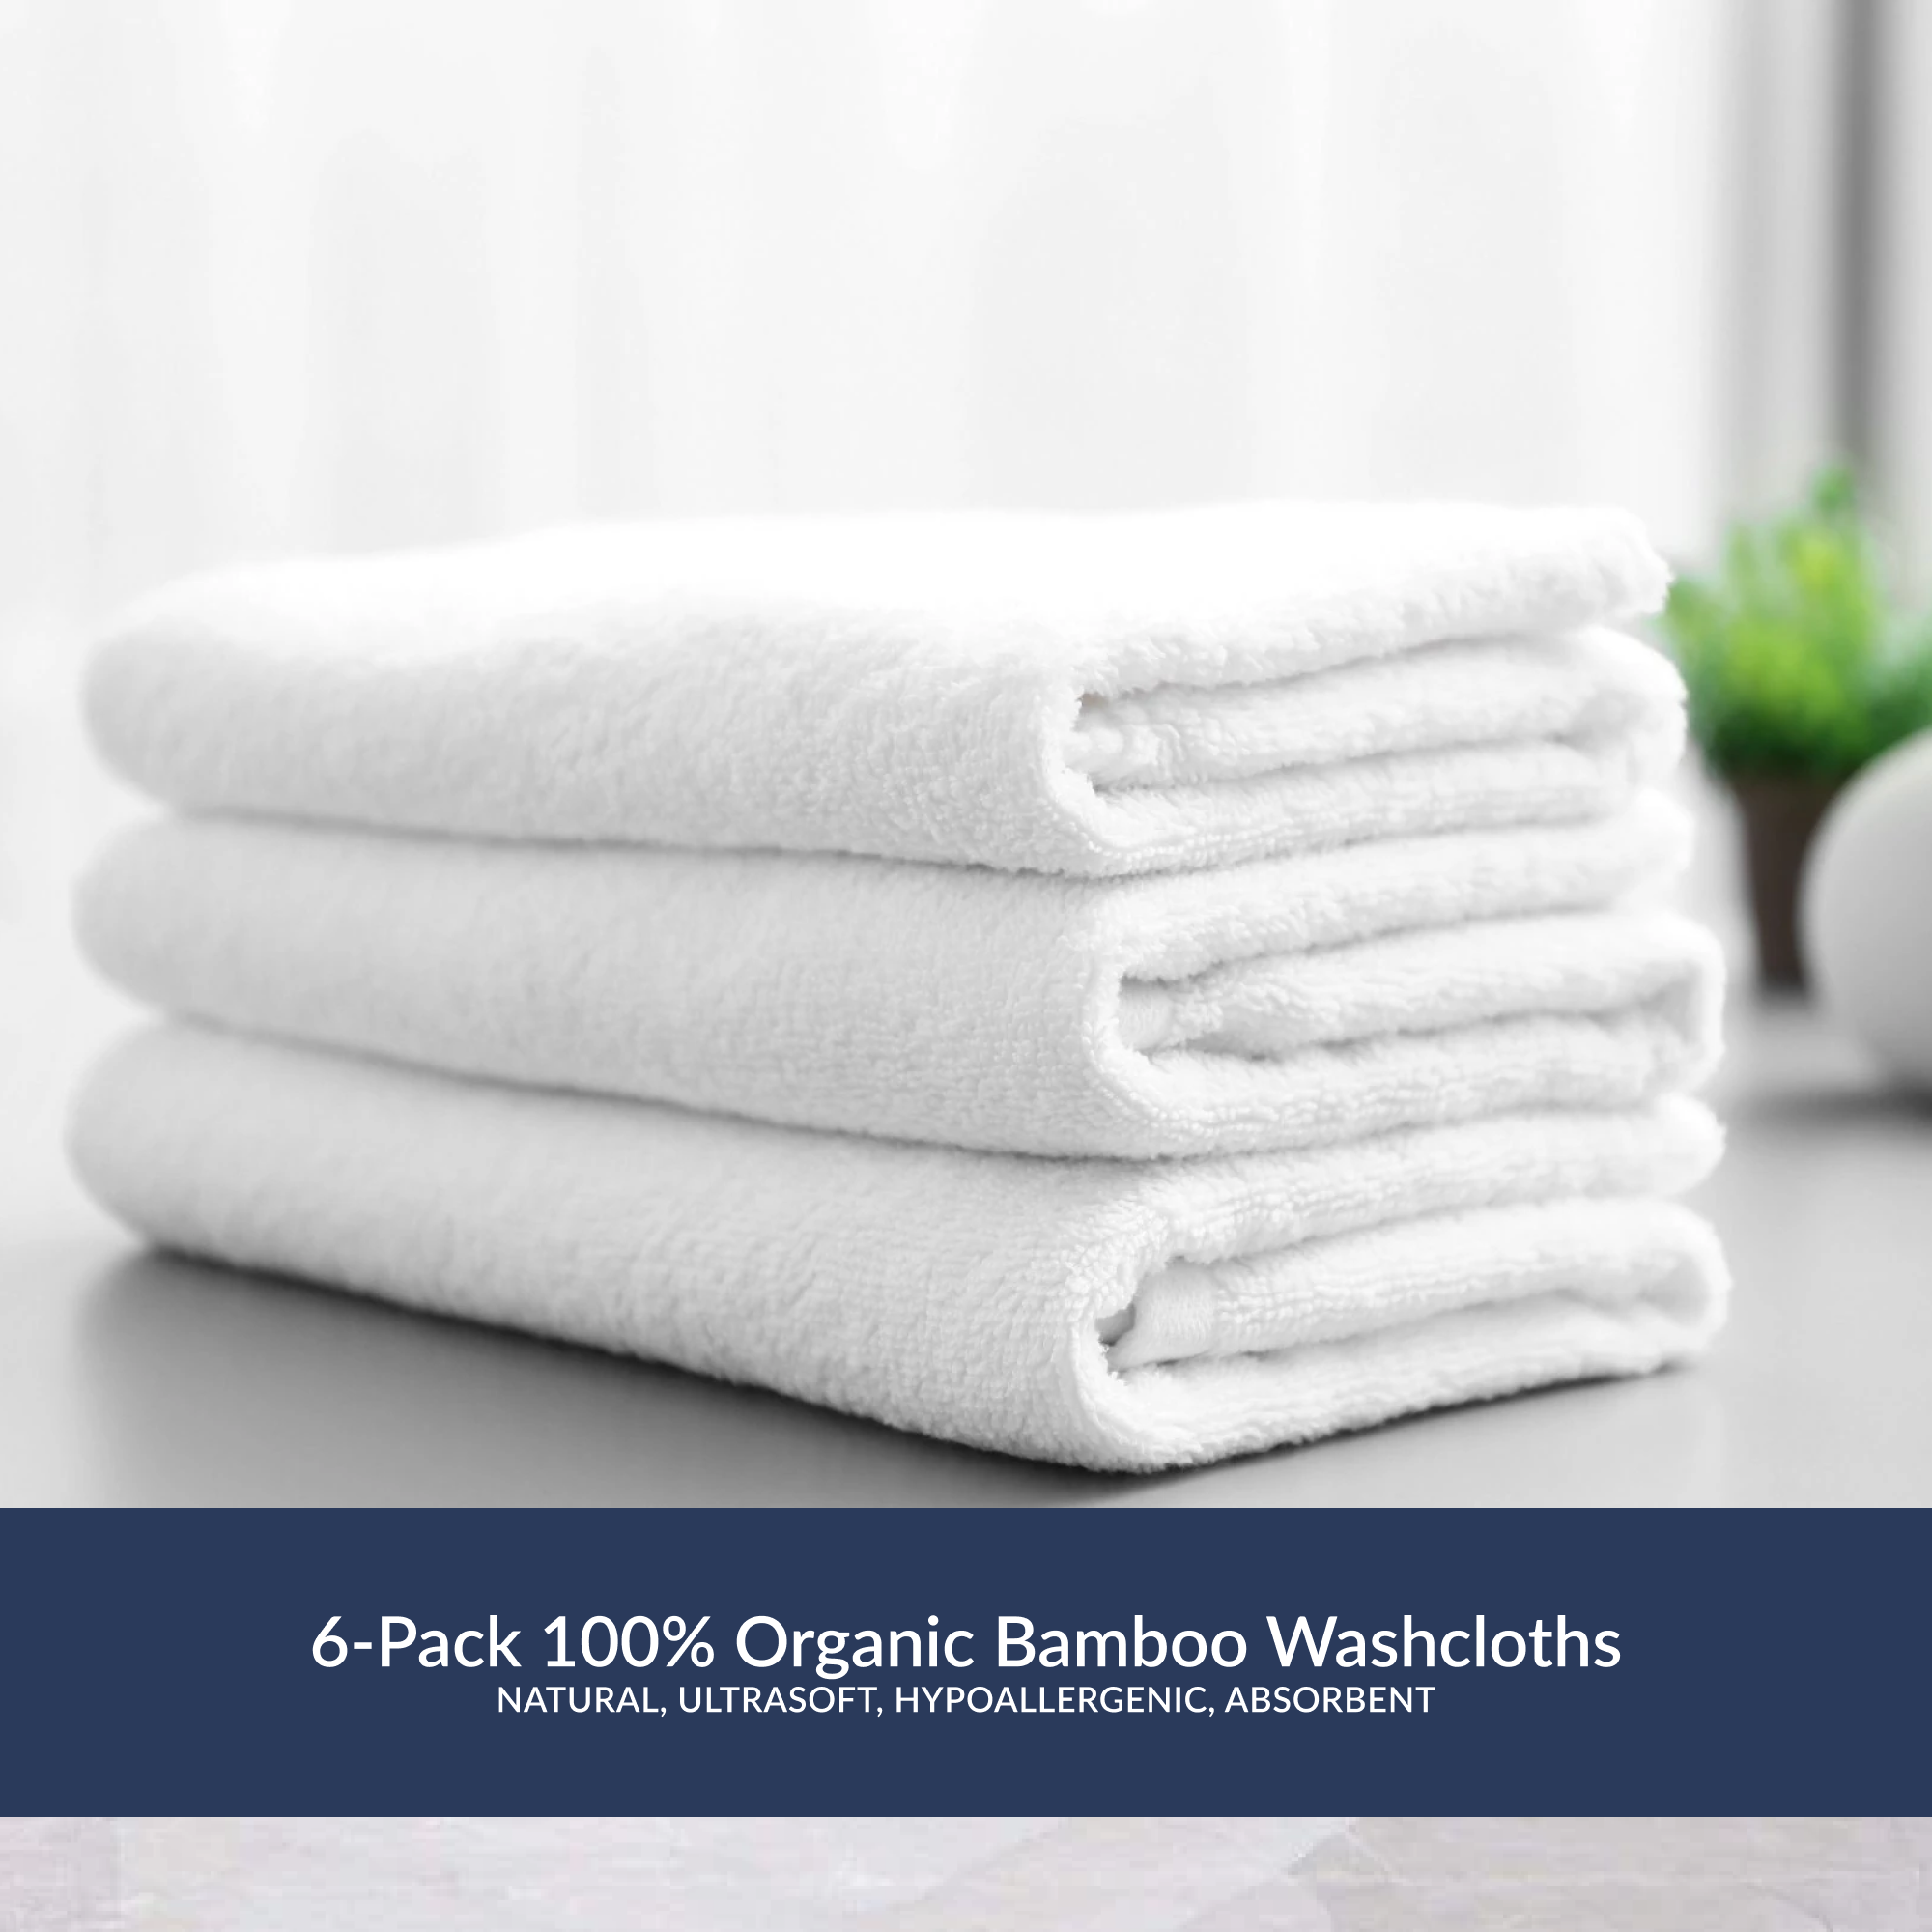 6-Pack 100% Organic Bamboo Washcloths